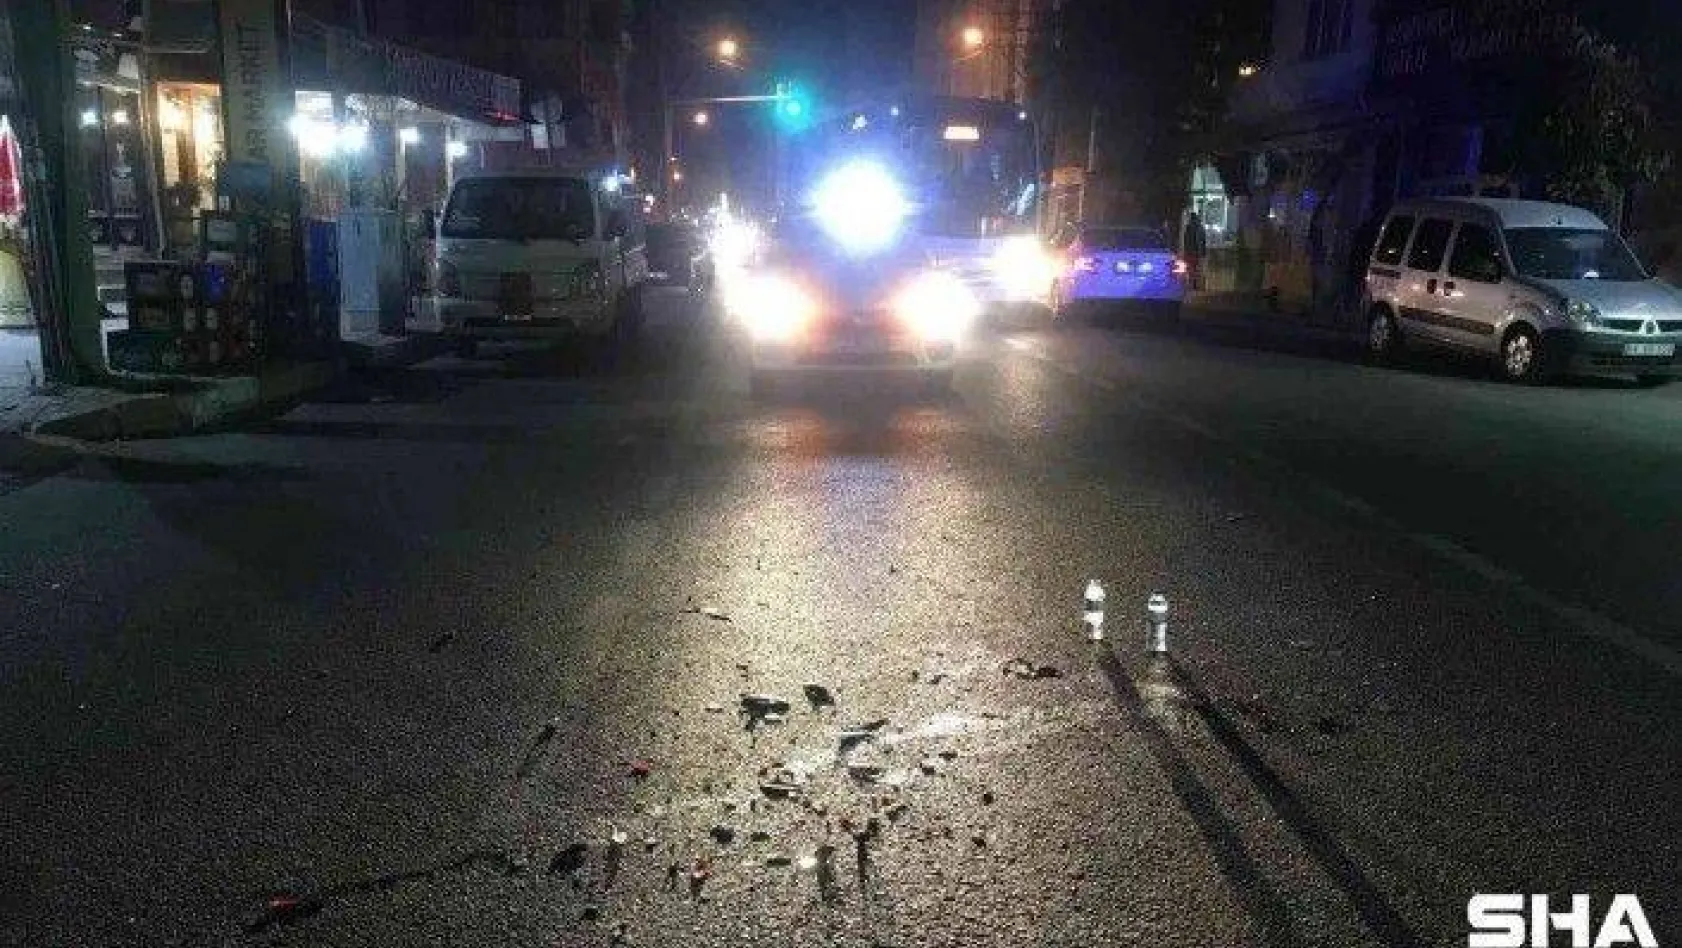 Tekirdağ'da kaza: 1 yaralı